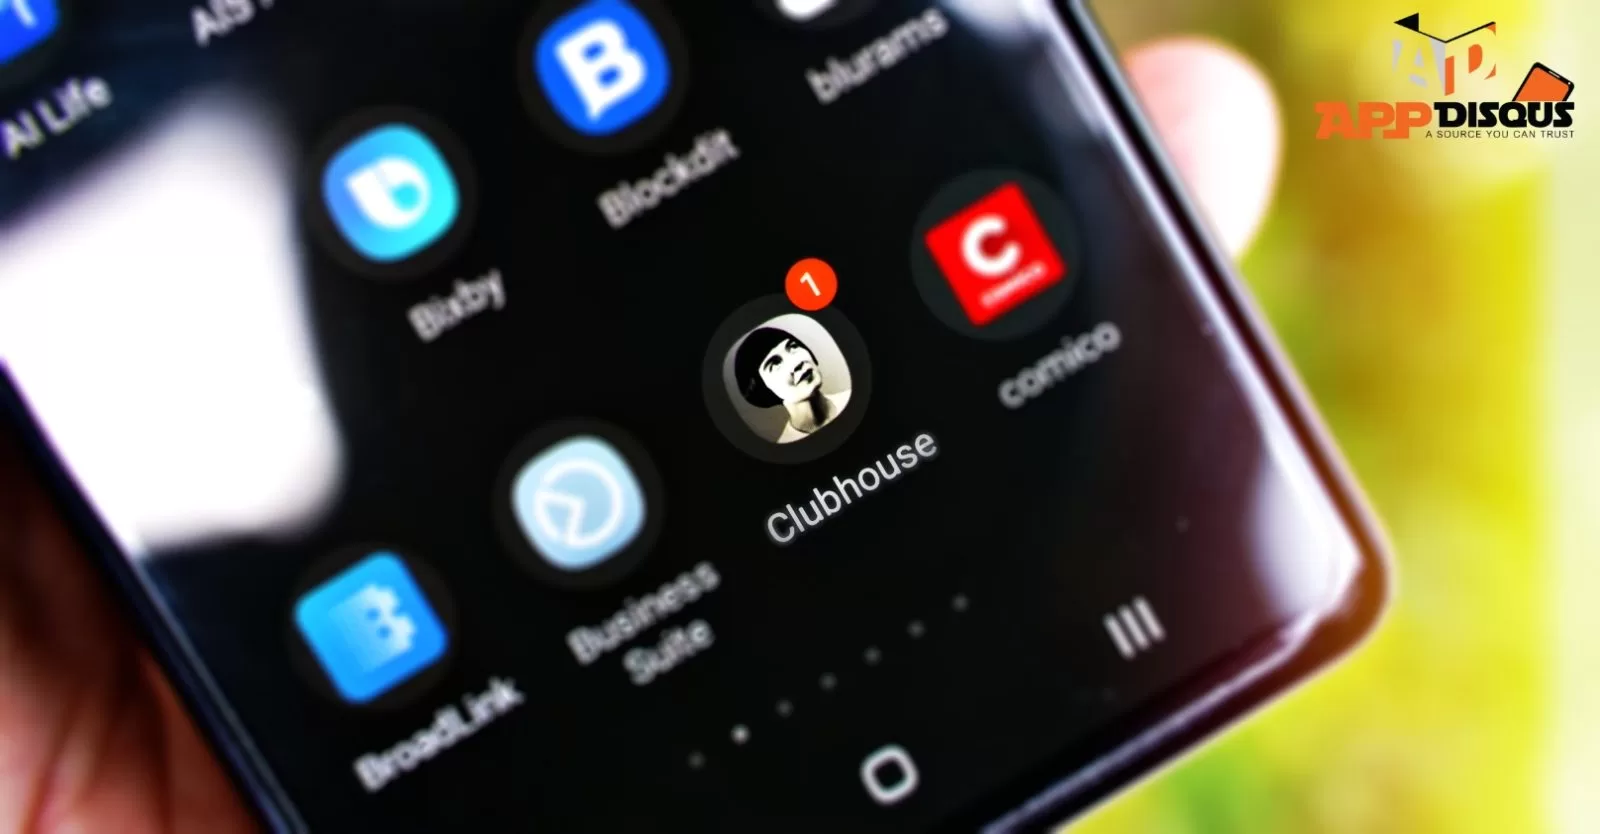 Android Clubhouse | .apk | Clubhouse สำหรับ Android มาแล้ว พร้อมช่องทางการดาวน์โหลดใช้งานได้ทันที